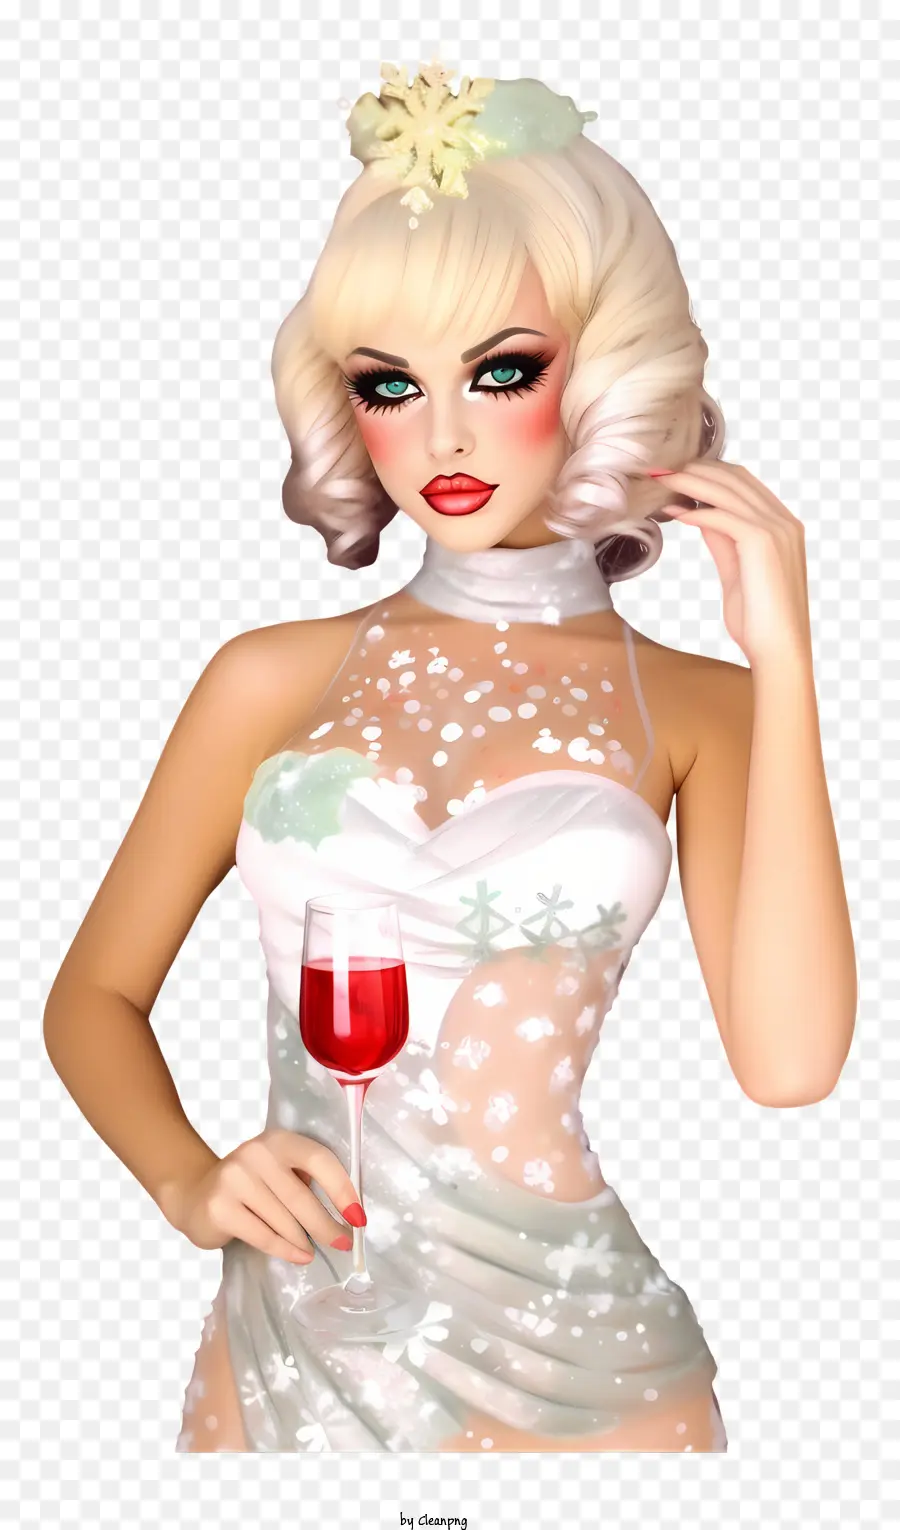 WaterColor Christmas Makeup Woman White Dress Tiara Red Wine Glass - Donna glamour sul tappeto rosso alla festa